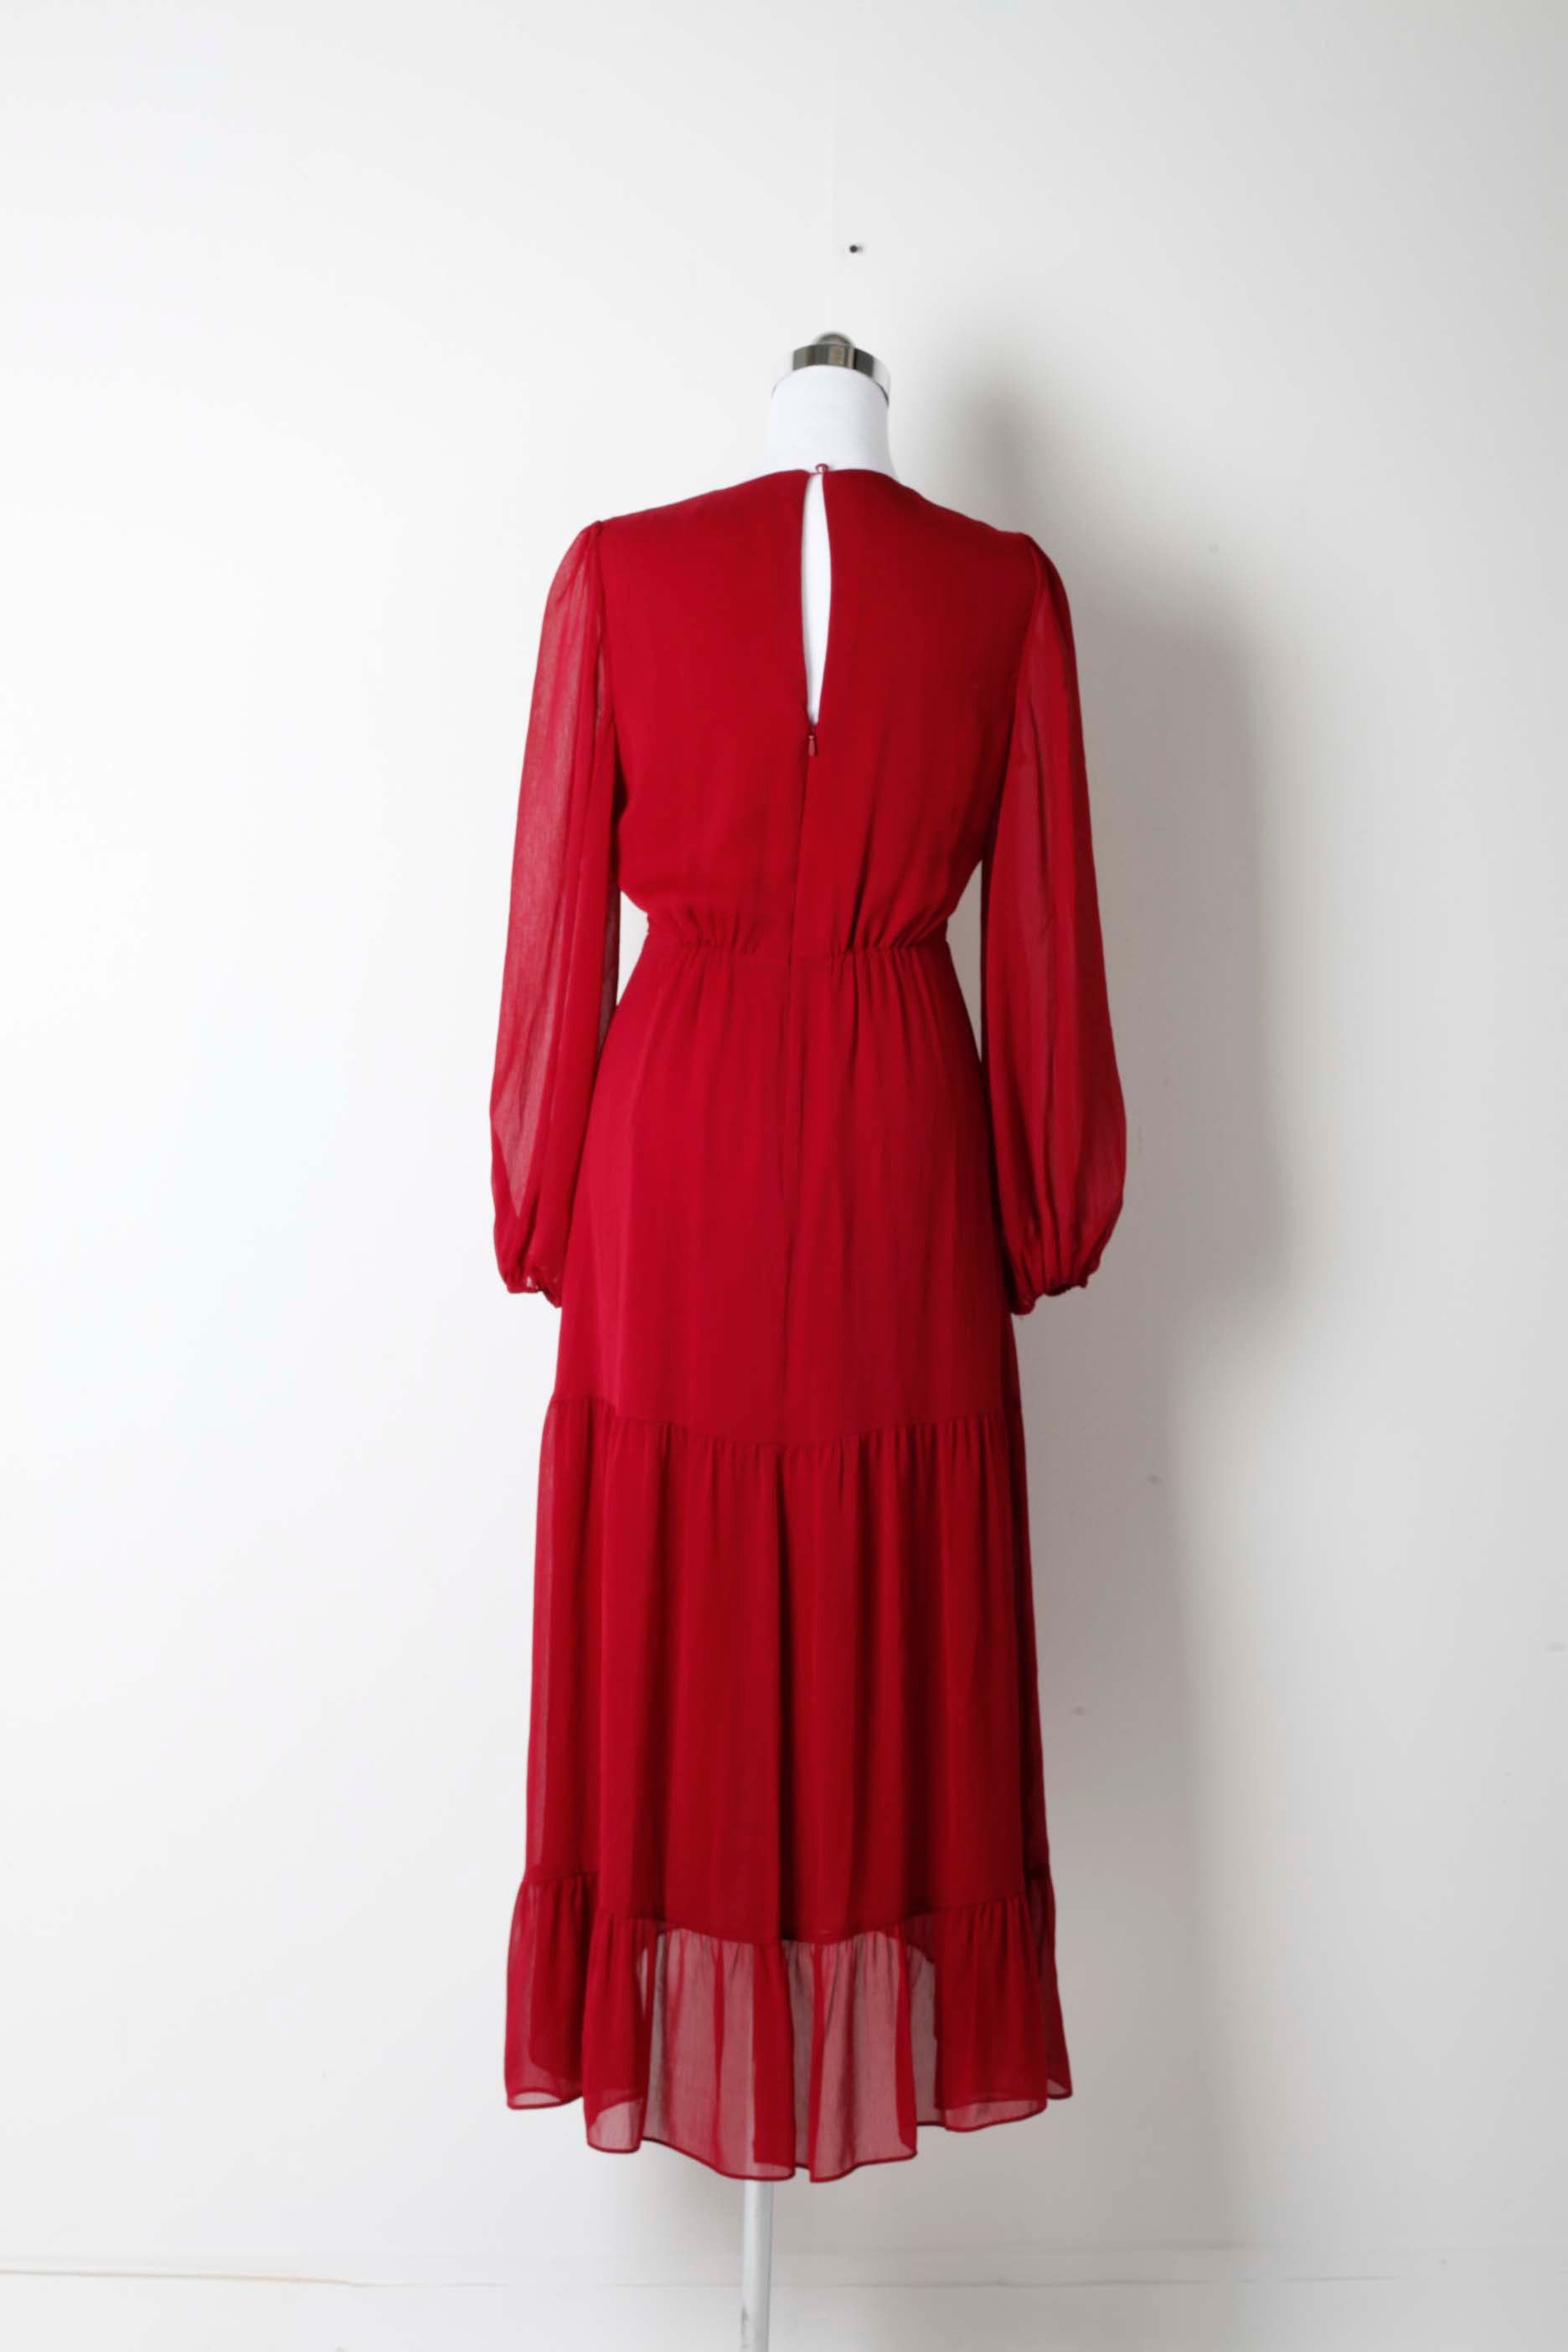 Red Layered Dress